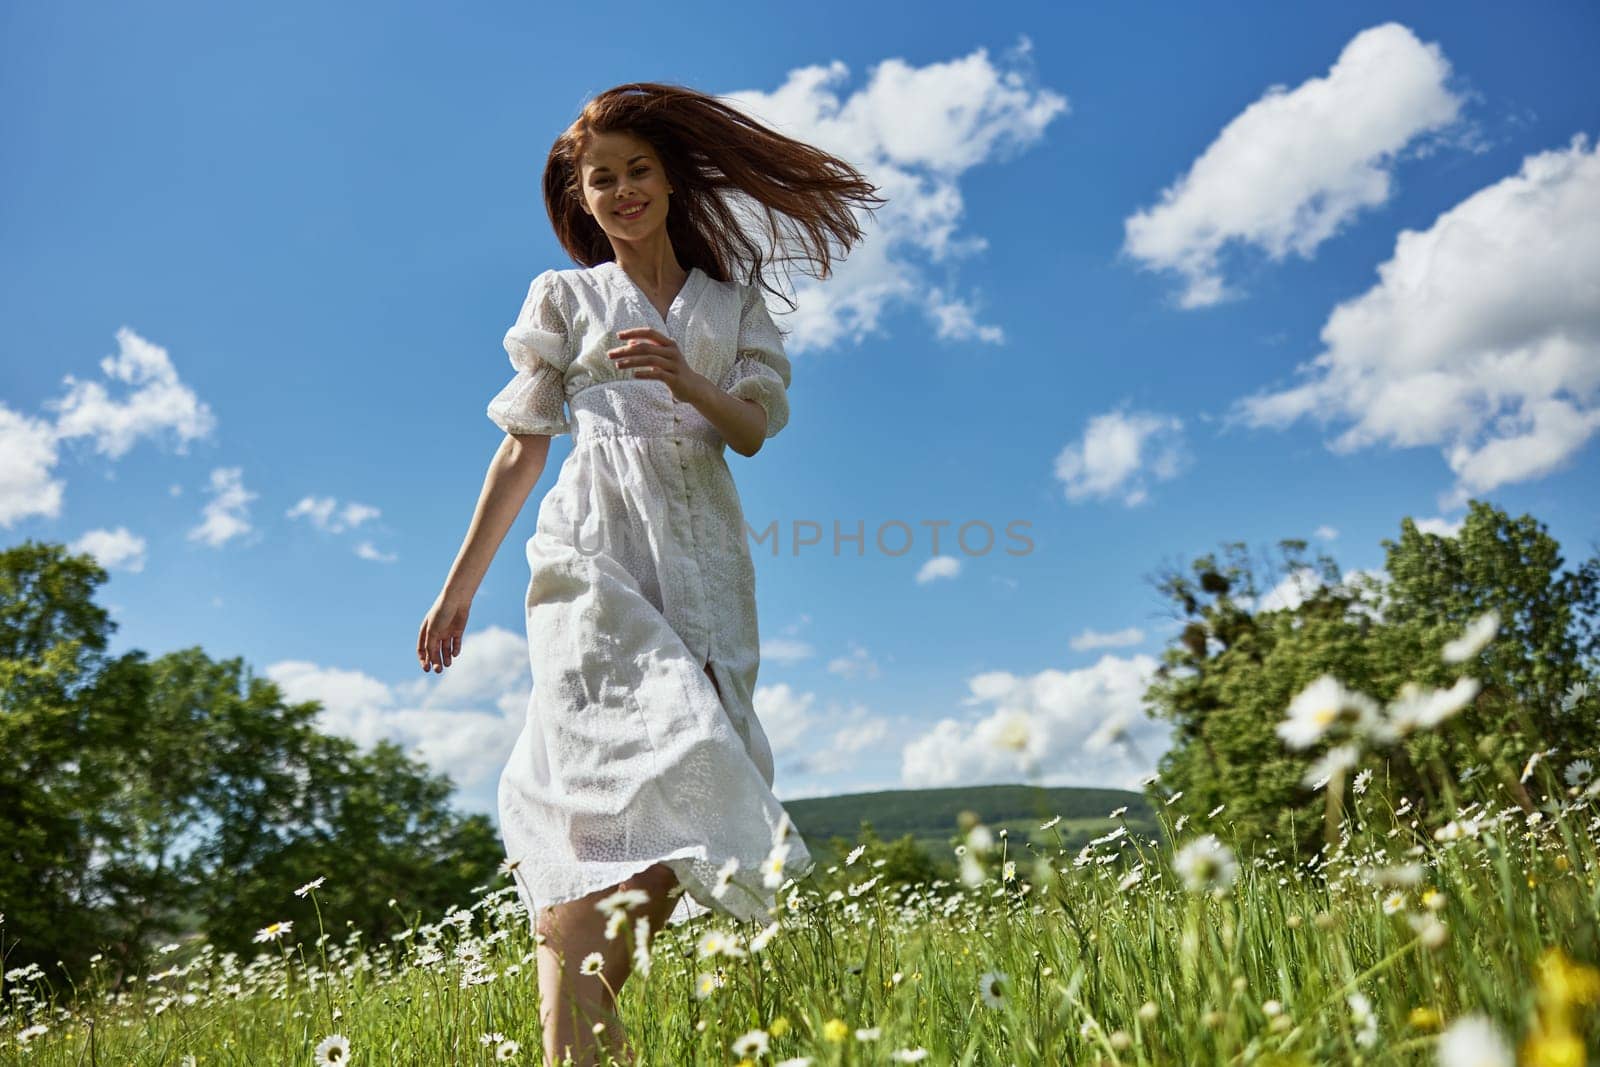 a happy woman in a light dress runs through a chamomile field against a clear sky. High quality photo